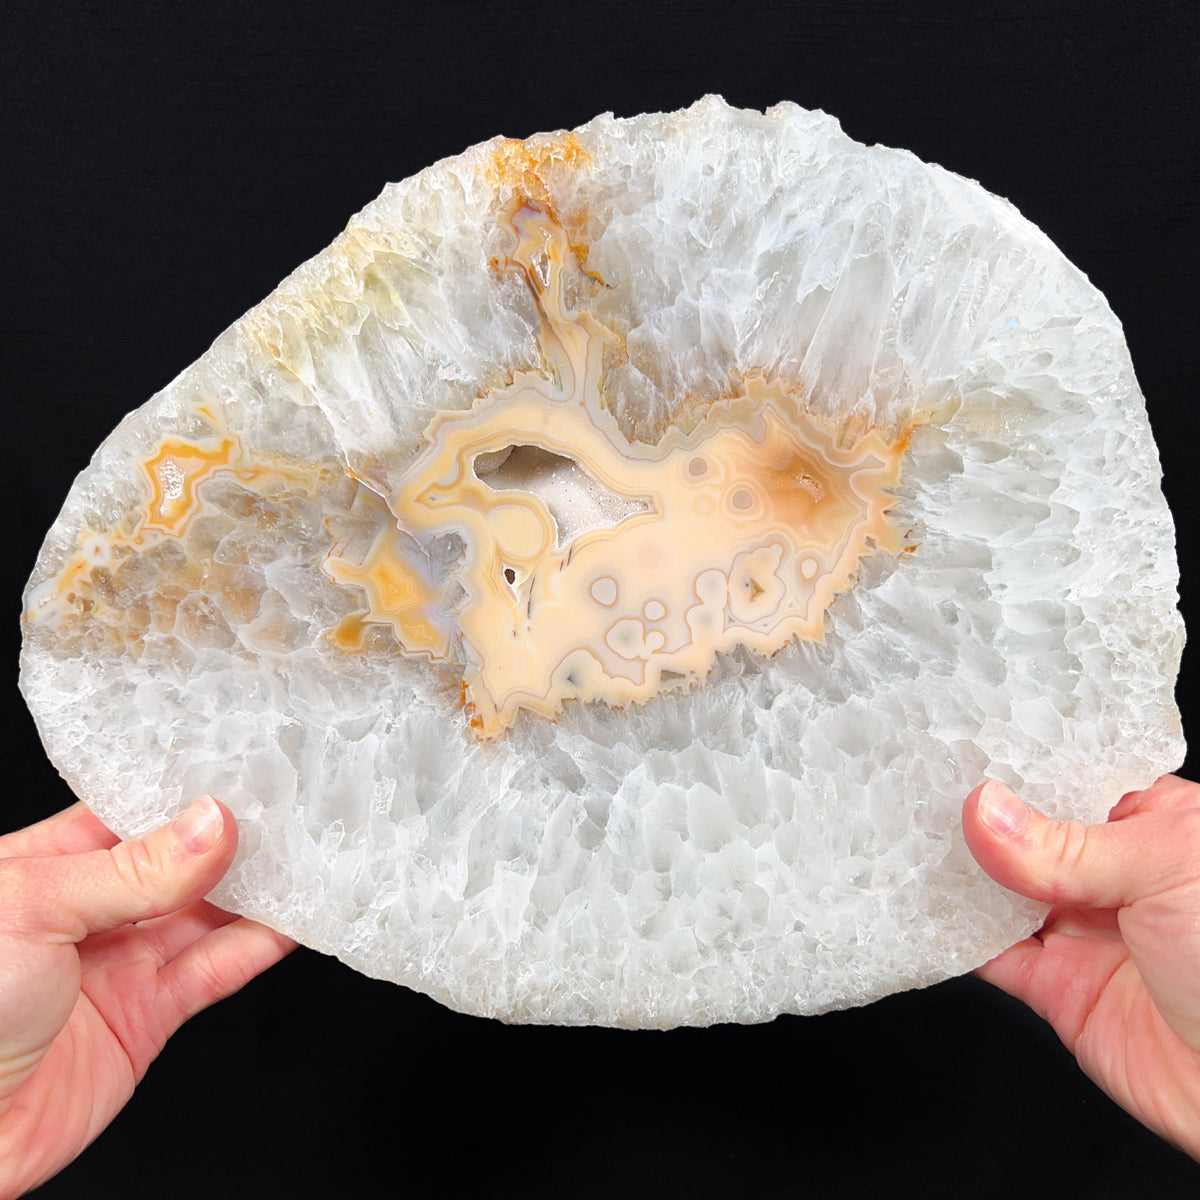 Large Drusy Quartz and Agate Geode Slab